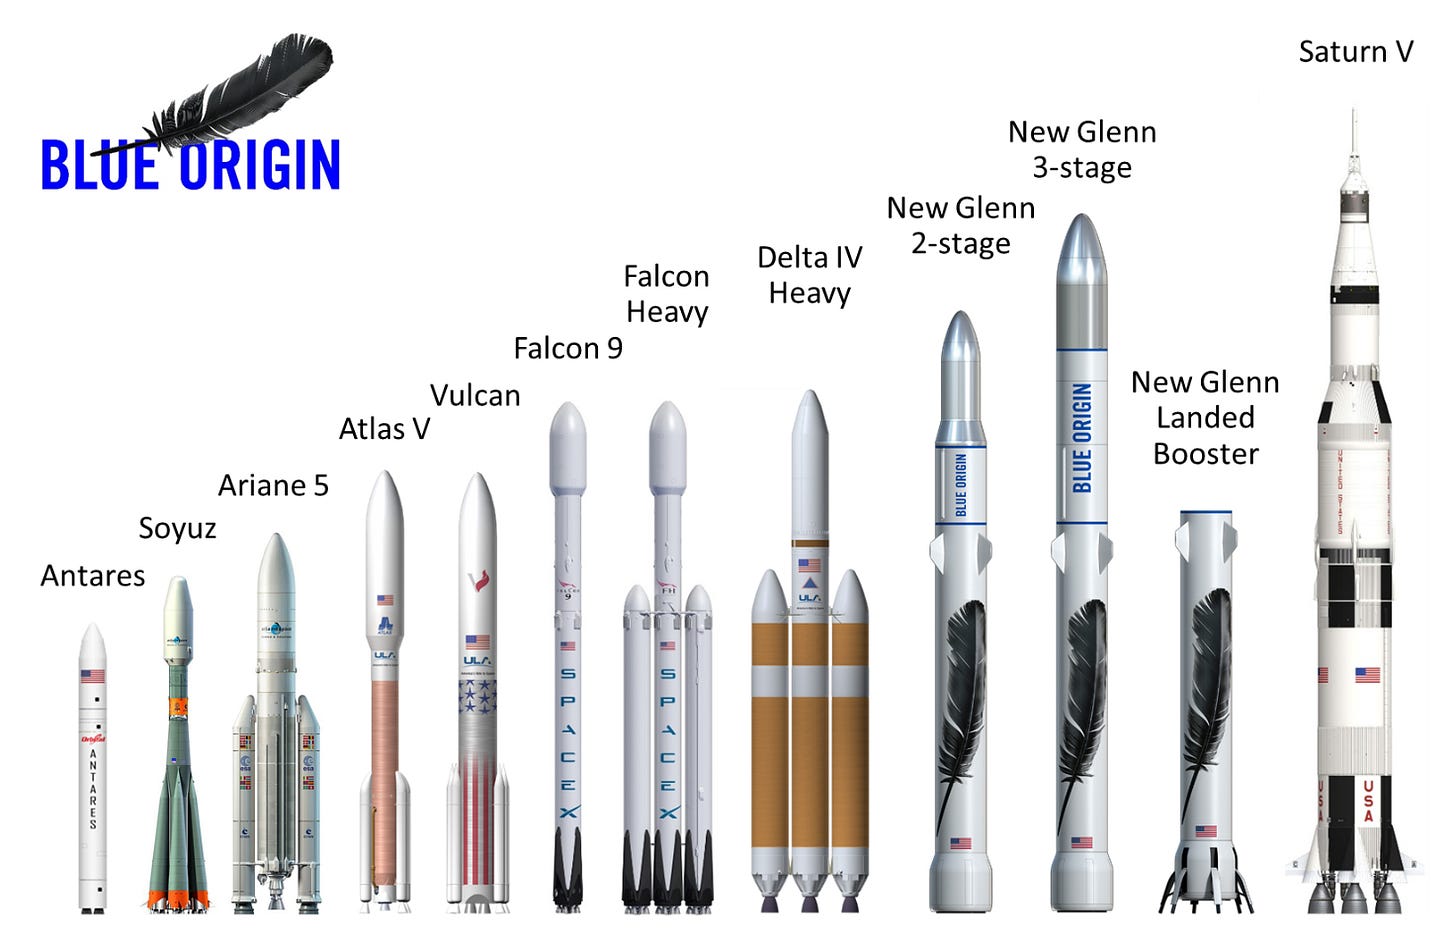 Size comparison of New Glenn rocket by Blue Origin.